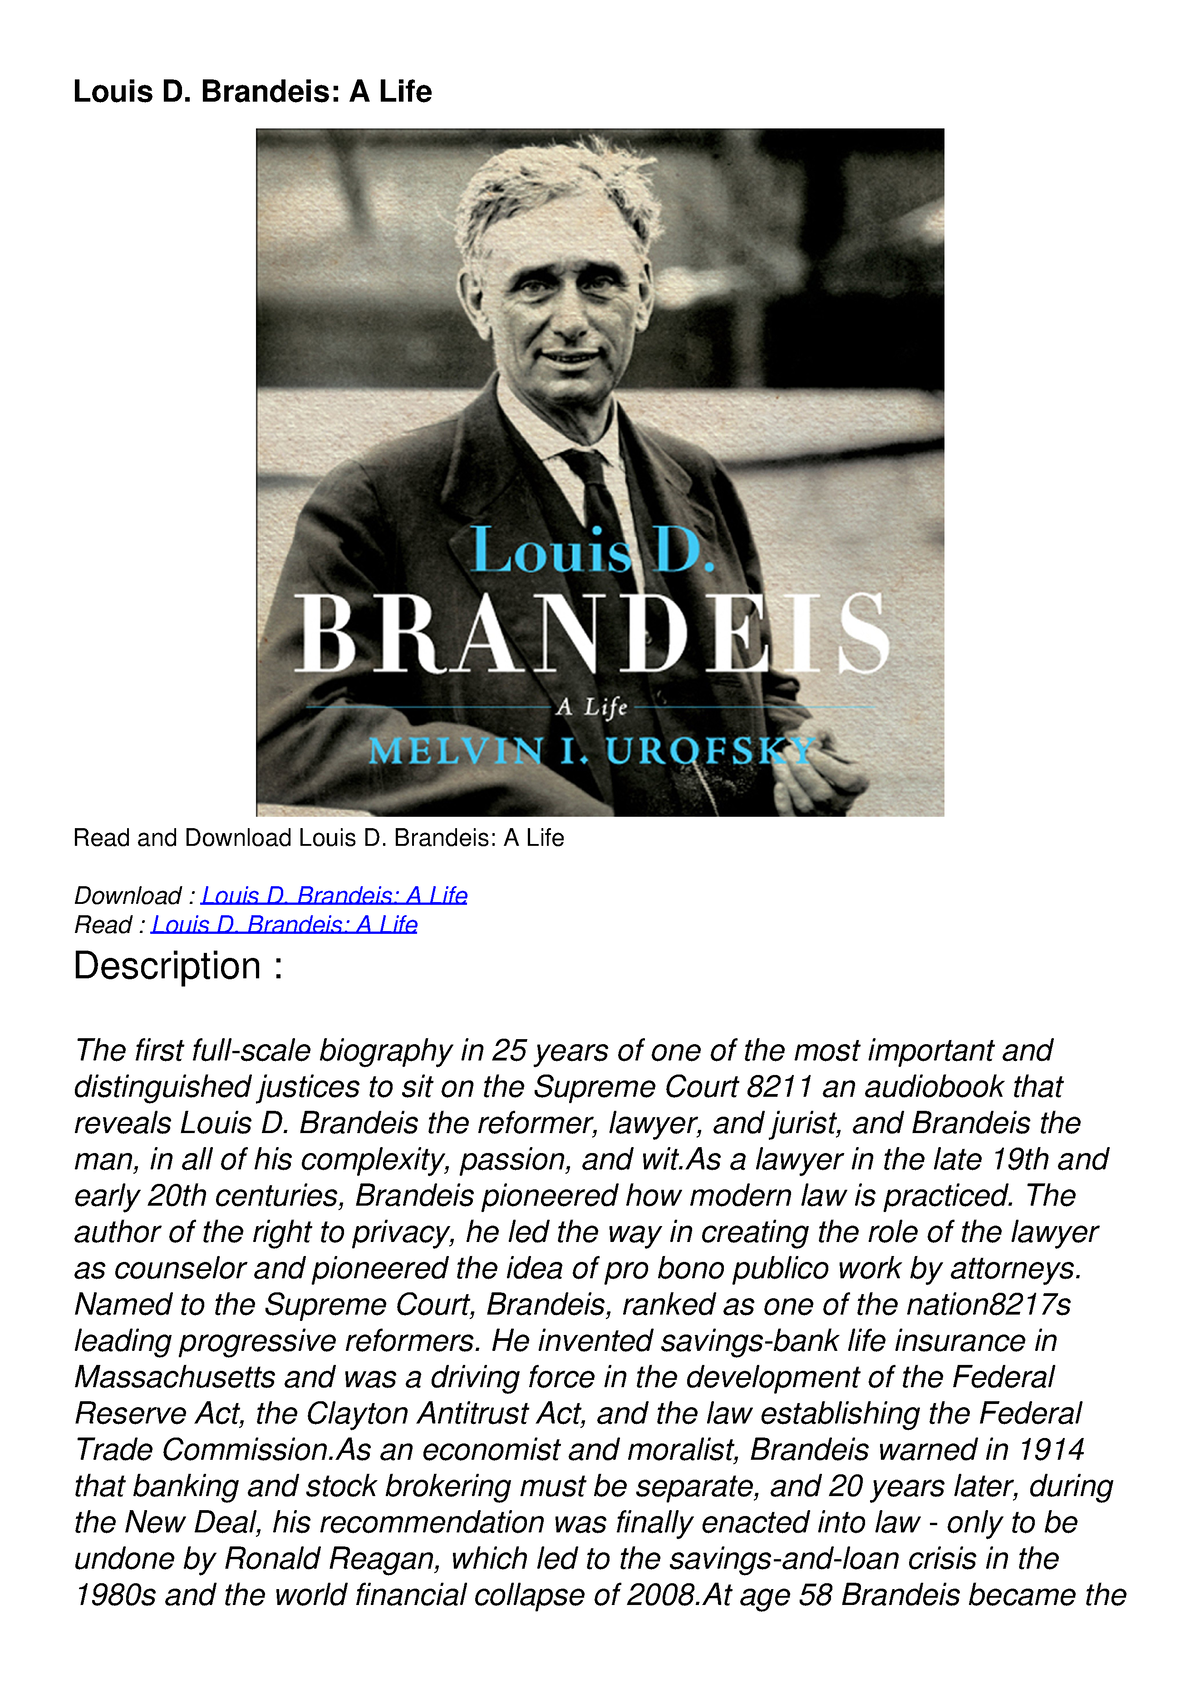 PDF READ ONLINE] Louis D. Brandeis: A Life - Medicine - Studocu